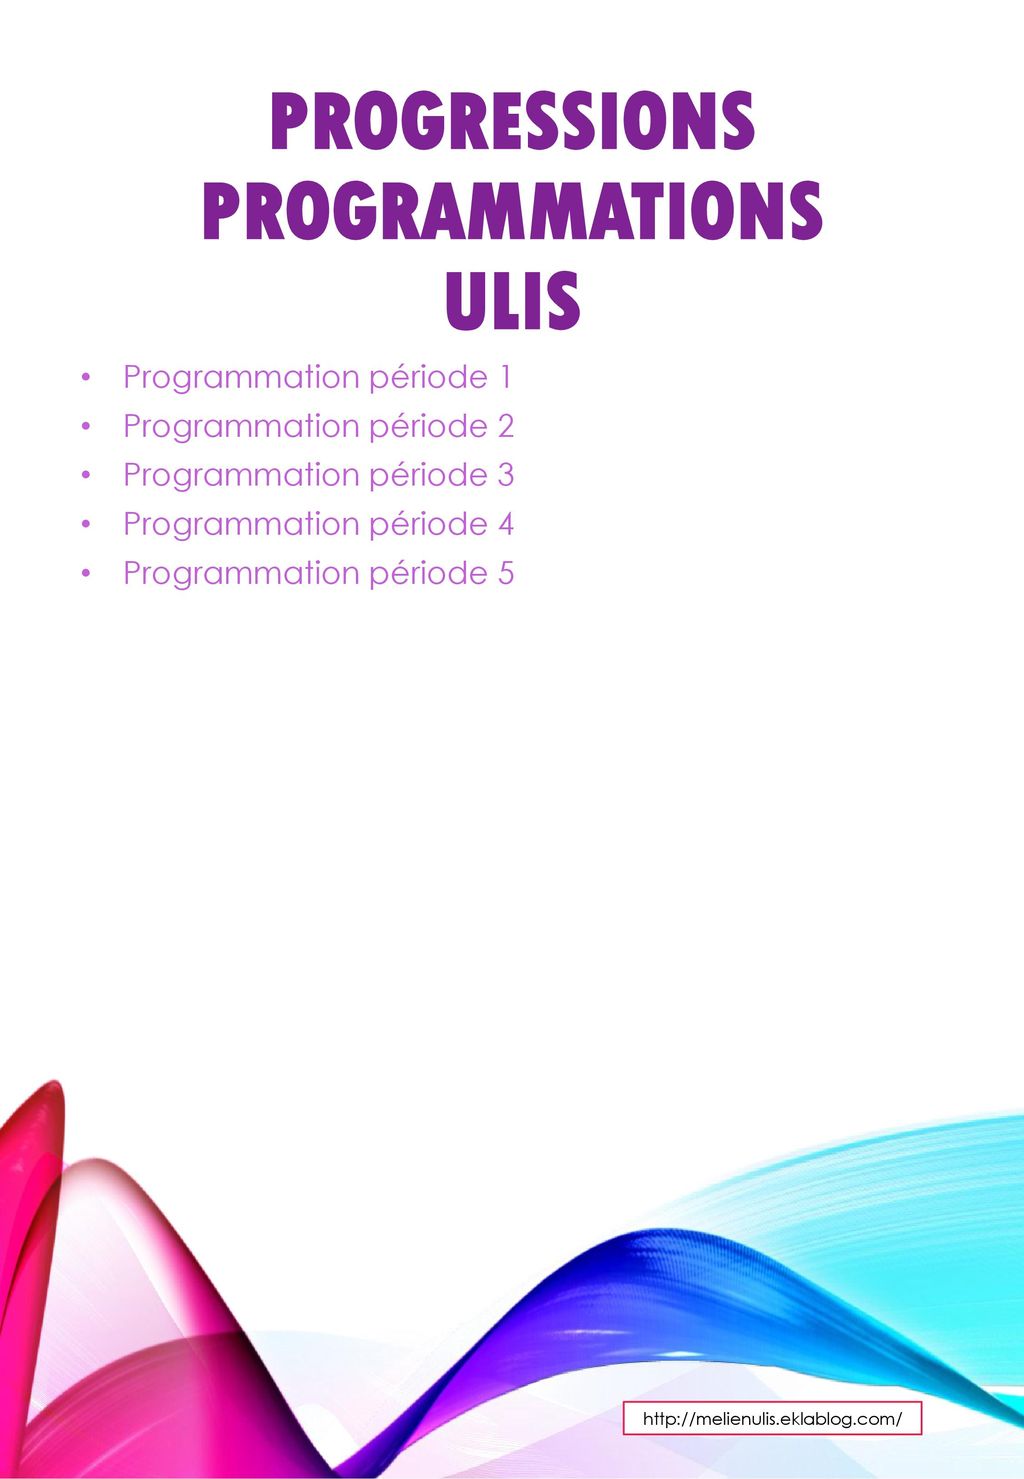 Progressions programmations ULIS